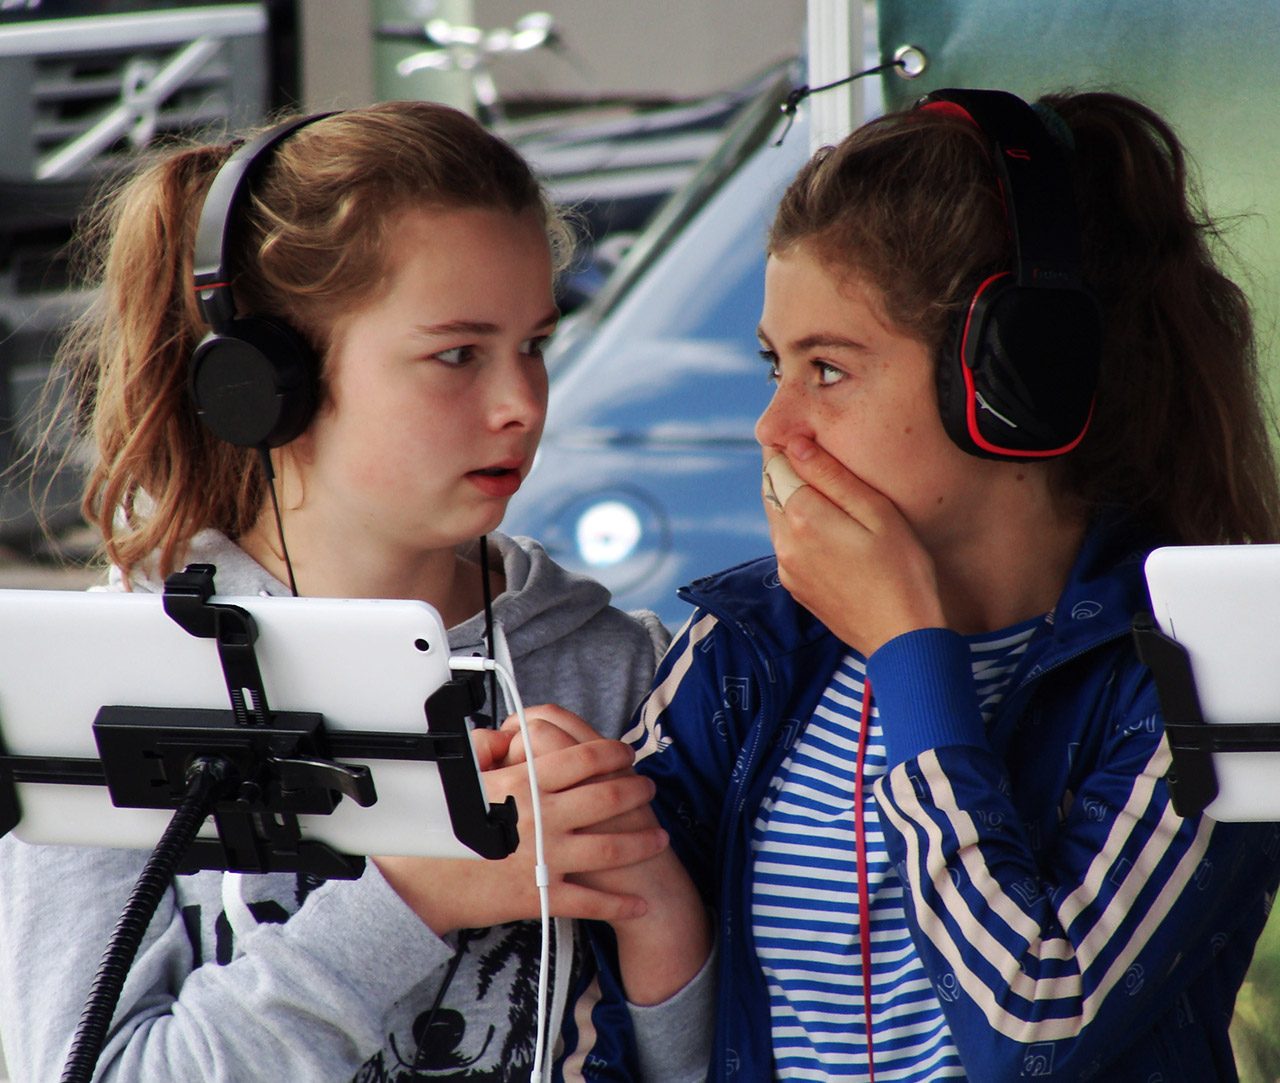 Two girls watching videos